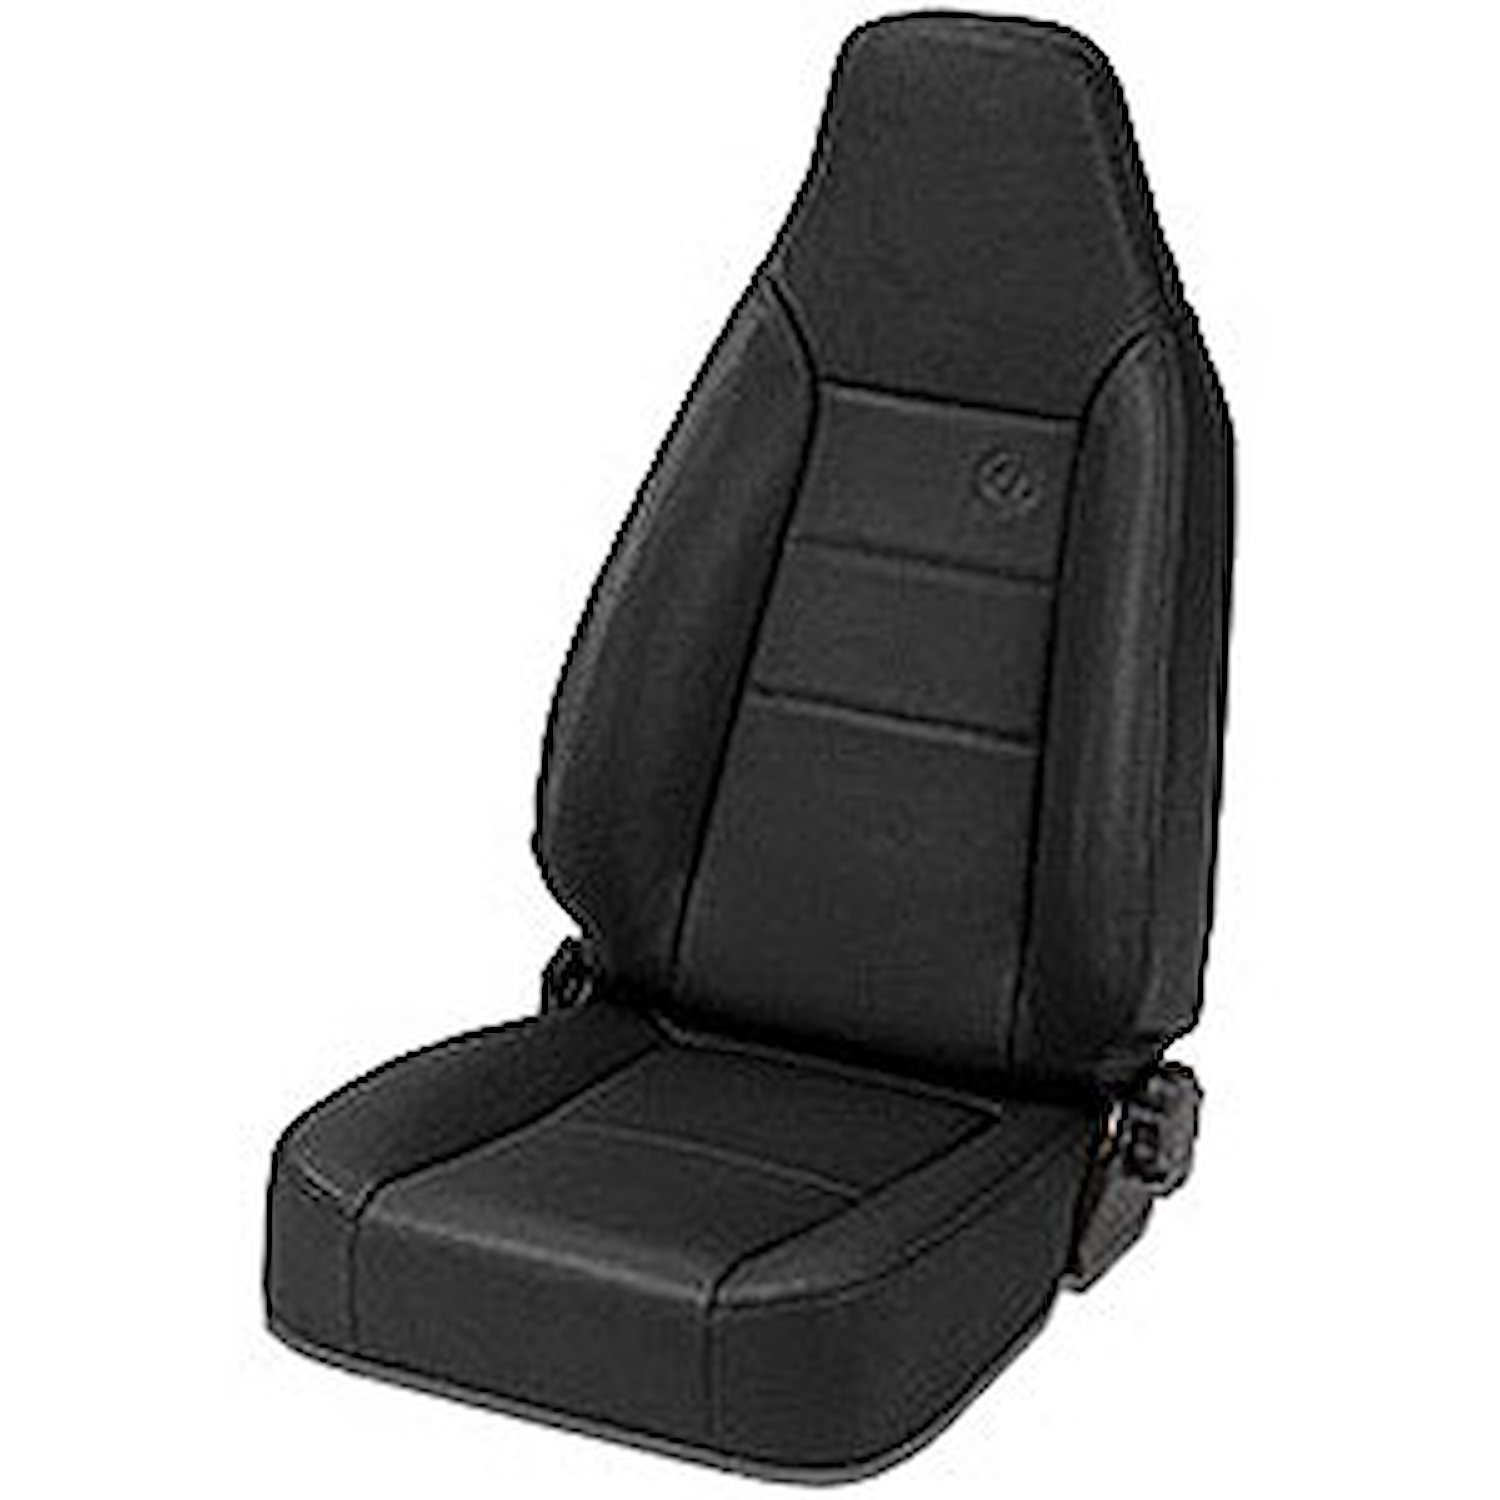 Trailmax II Sport Seat, Black Denim, Front, High-Back,